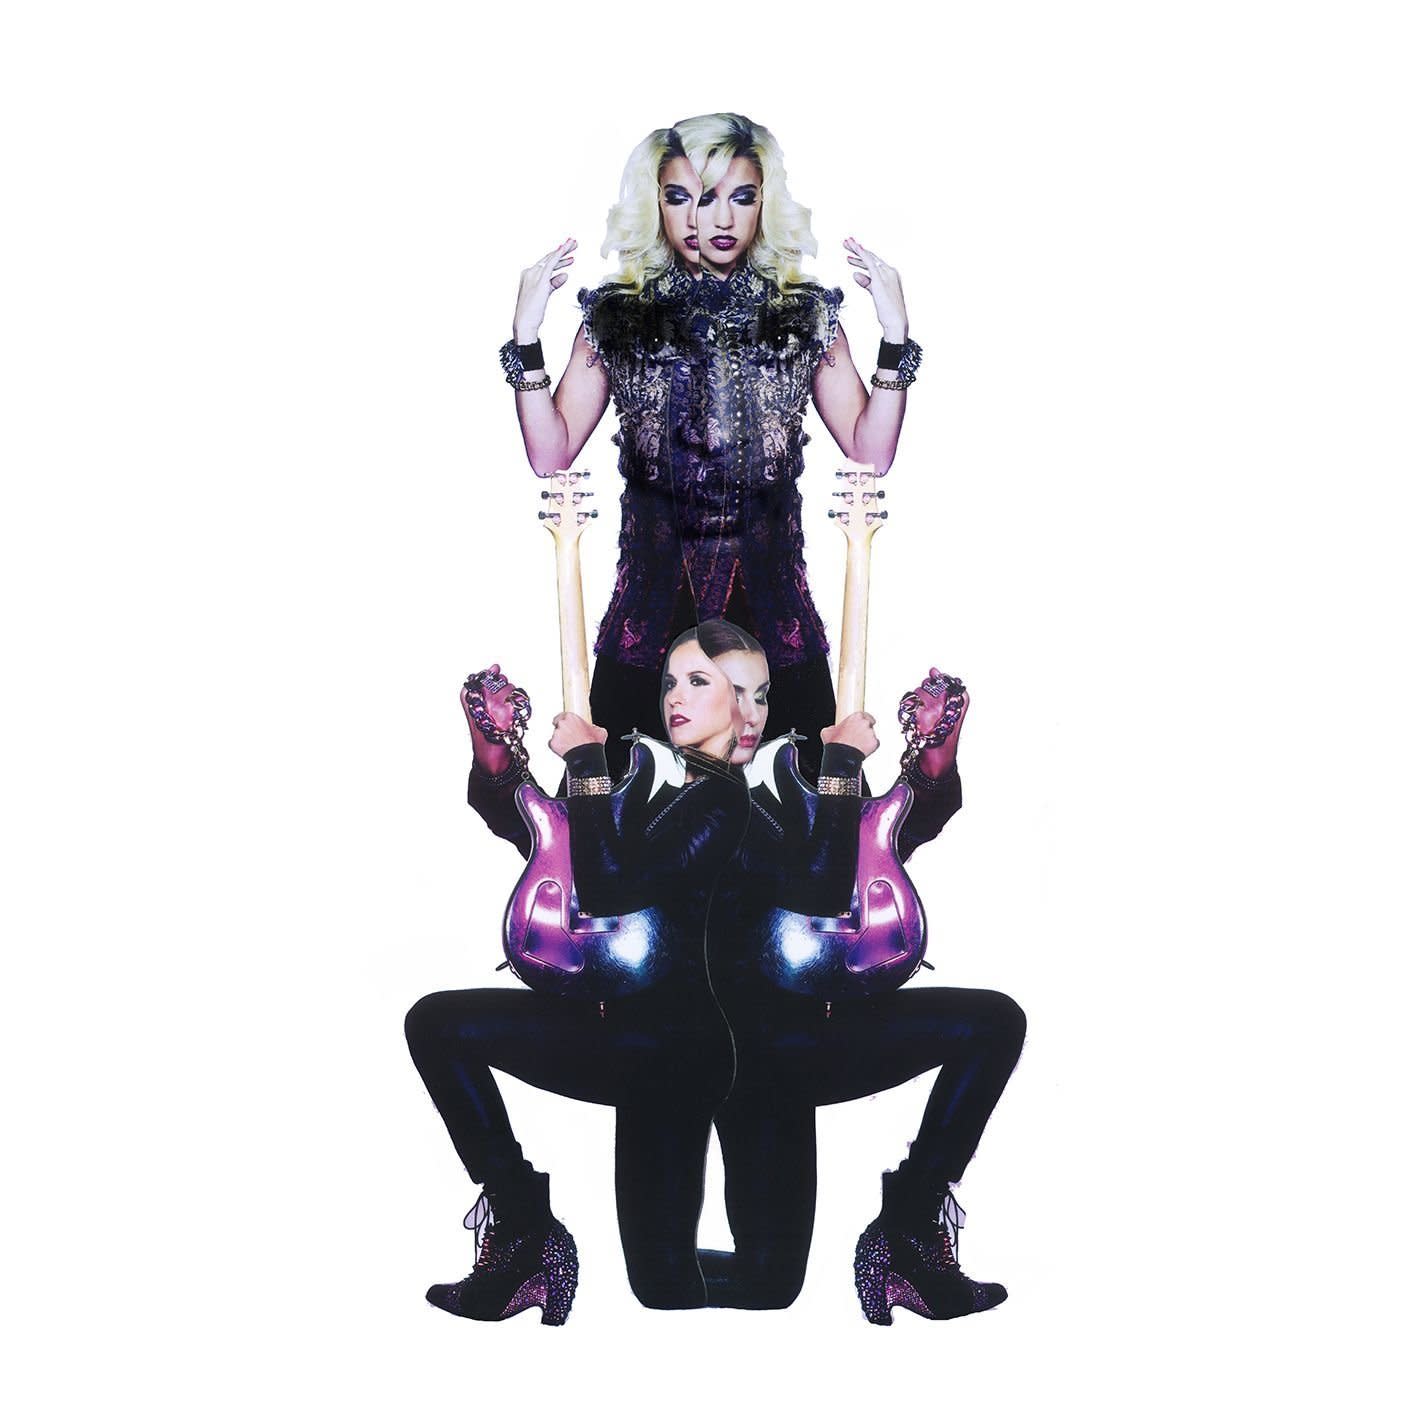 Plectrumelectrum-prince-cover-album